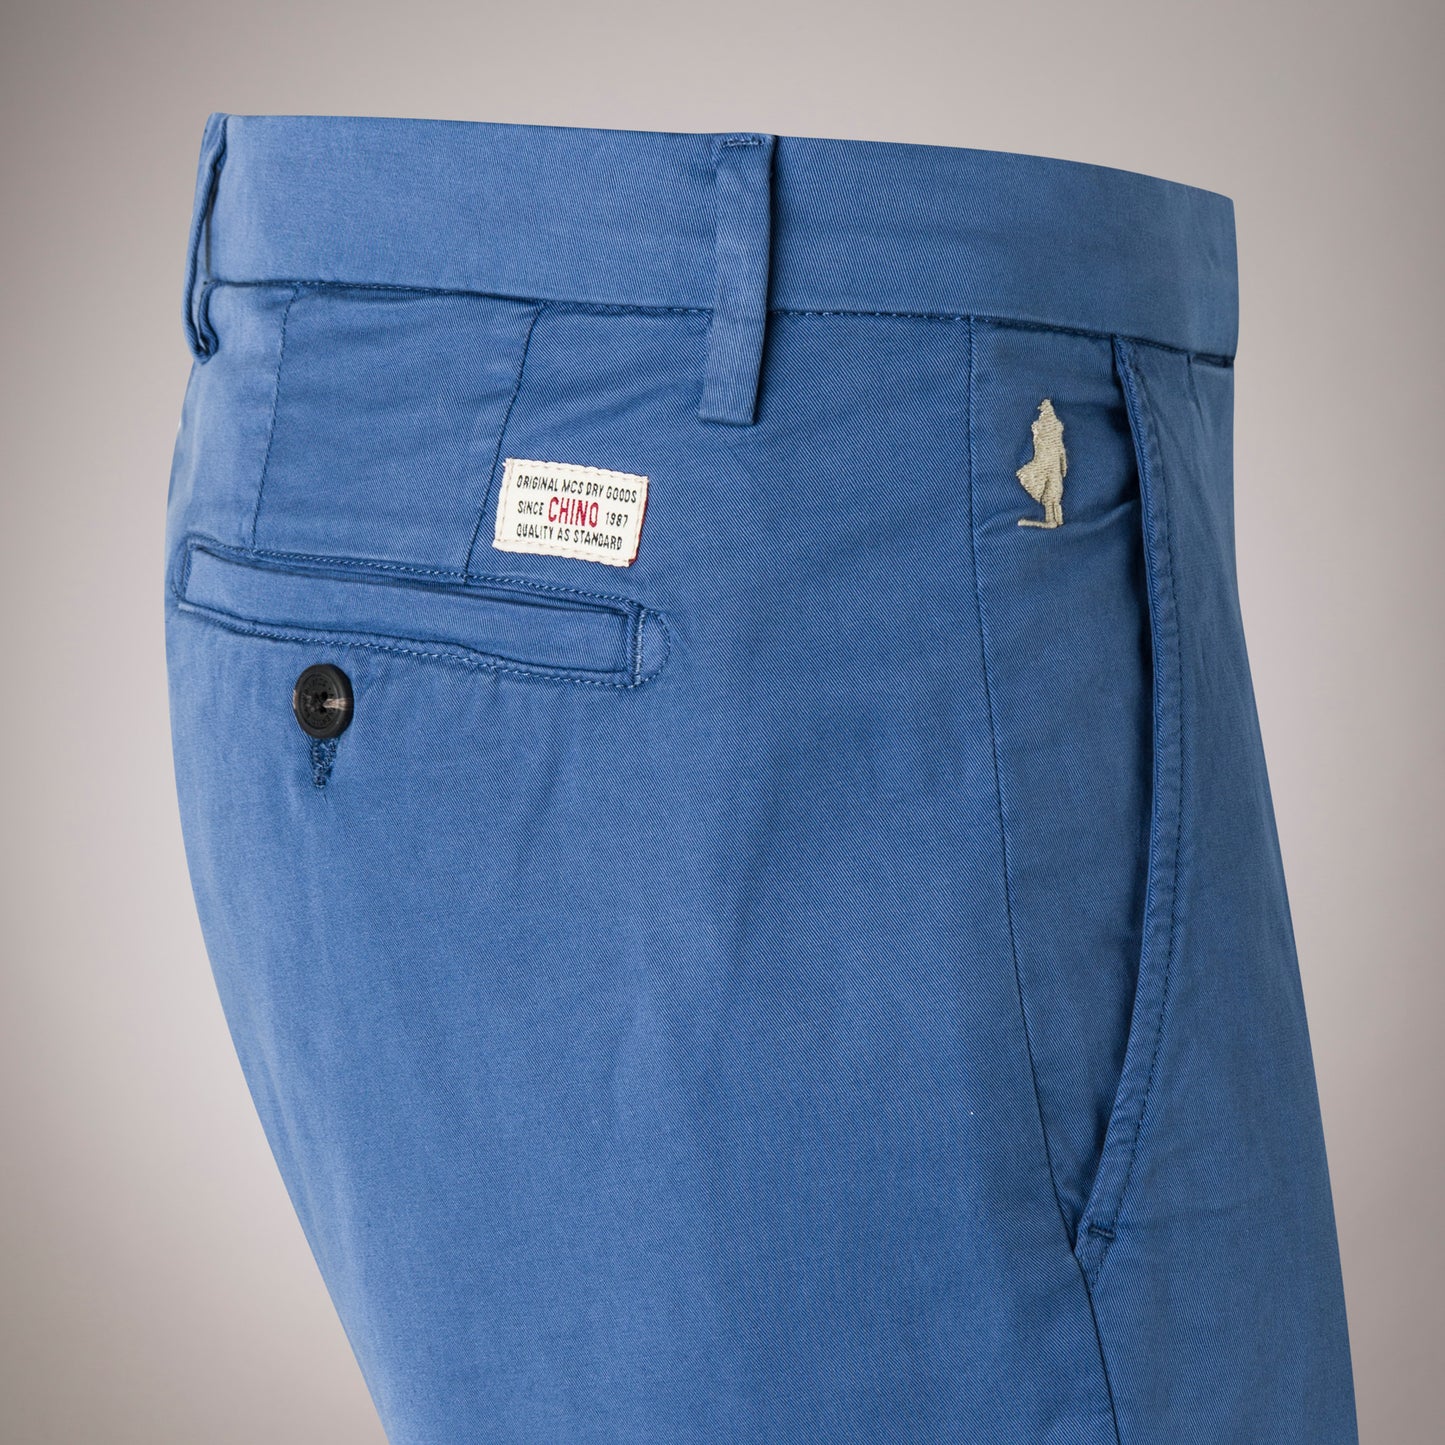 Marlboro Classics Light Blue Colour Stretch Twill Chino Pants